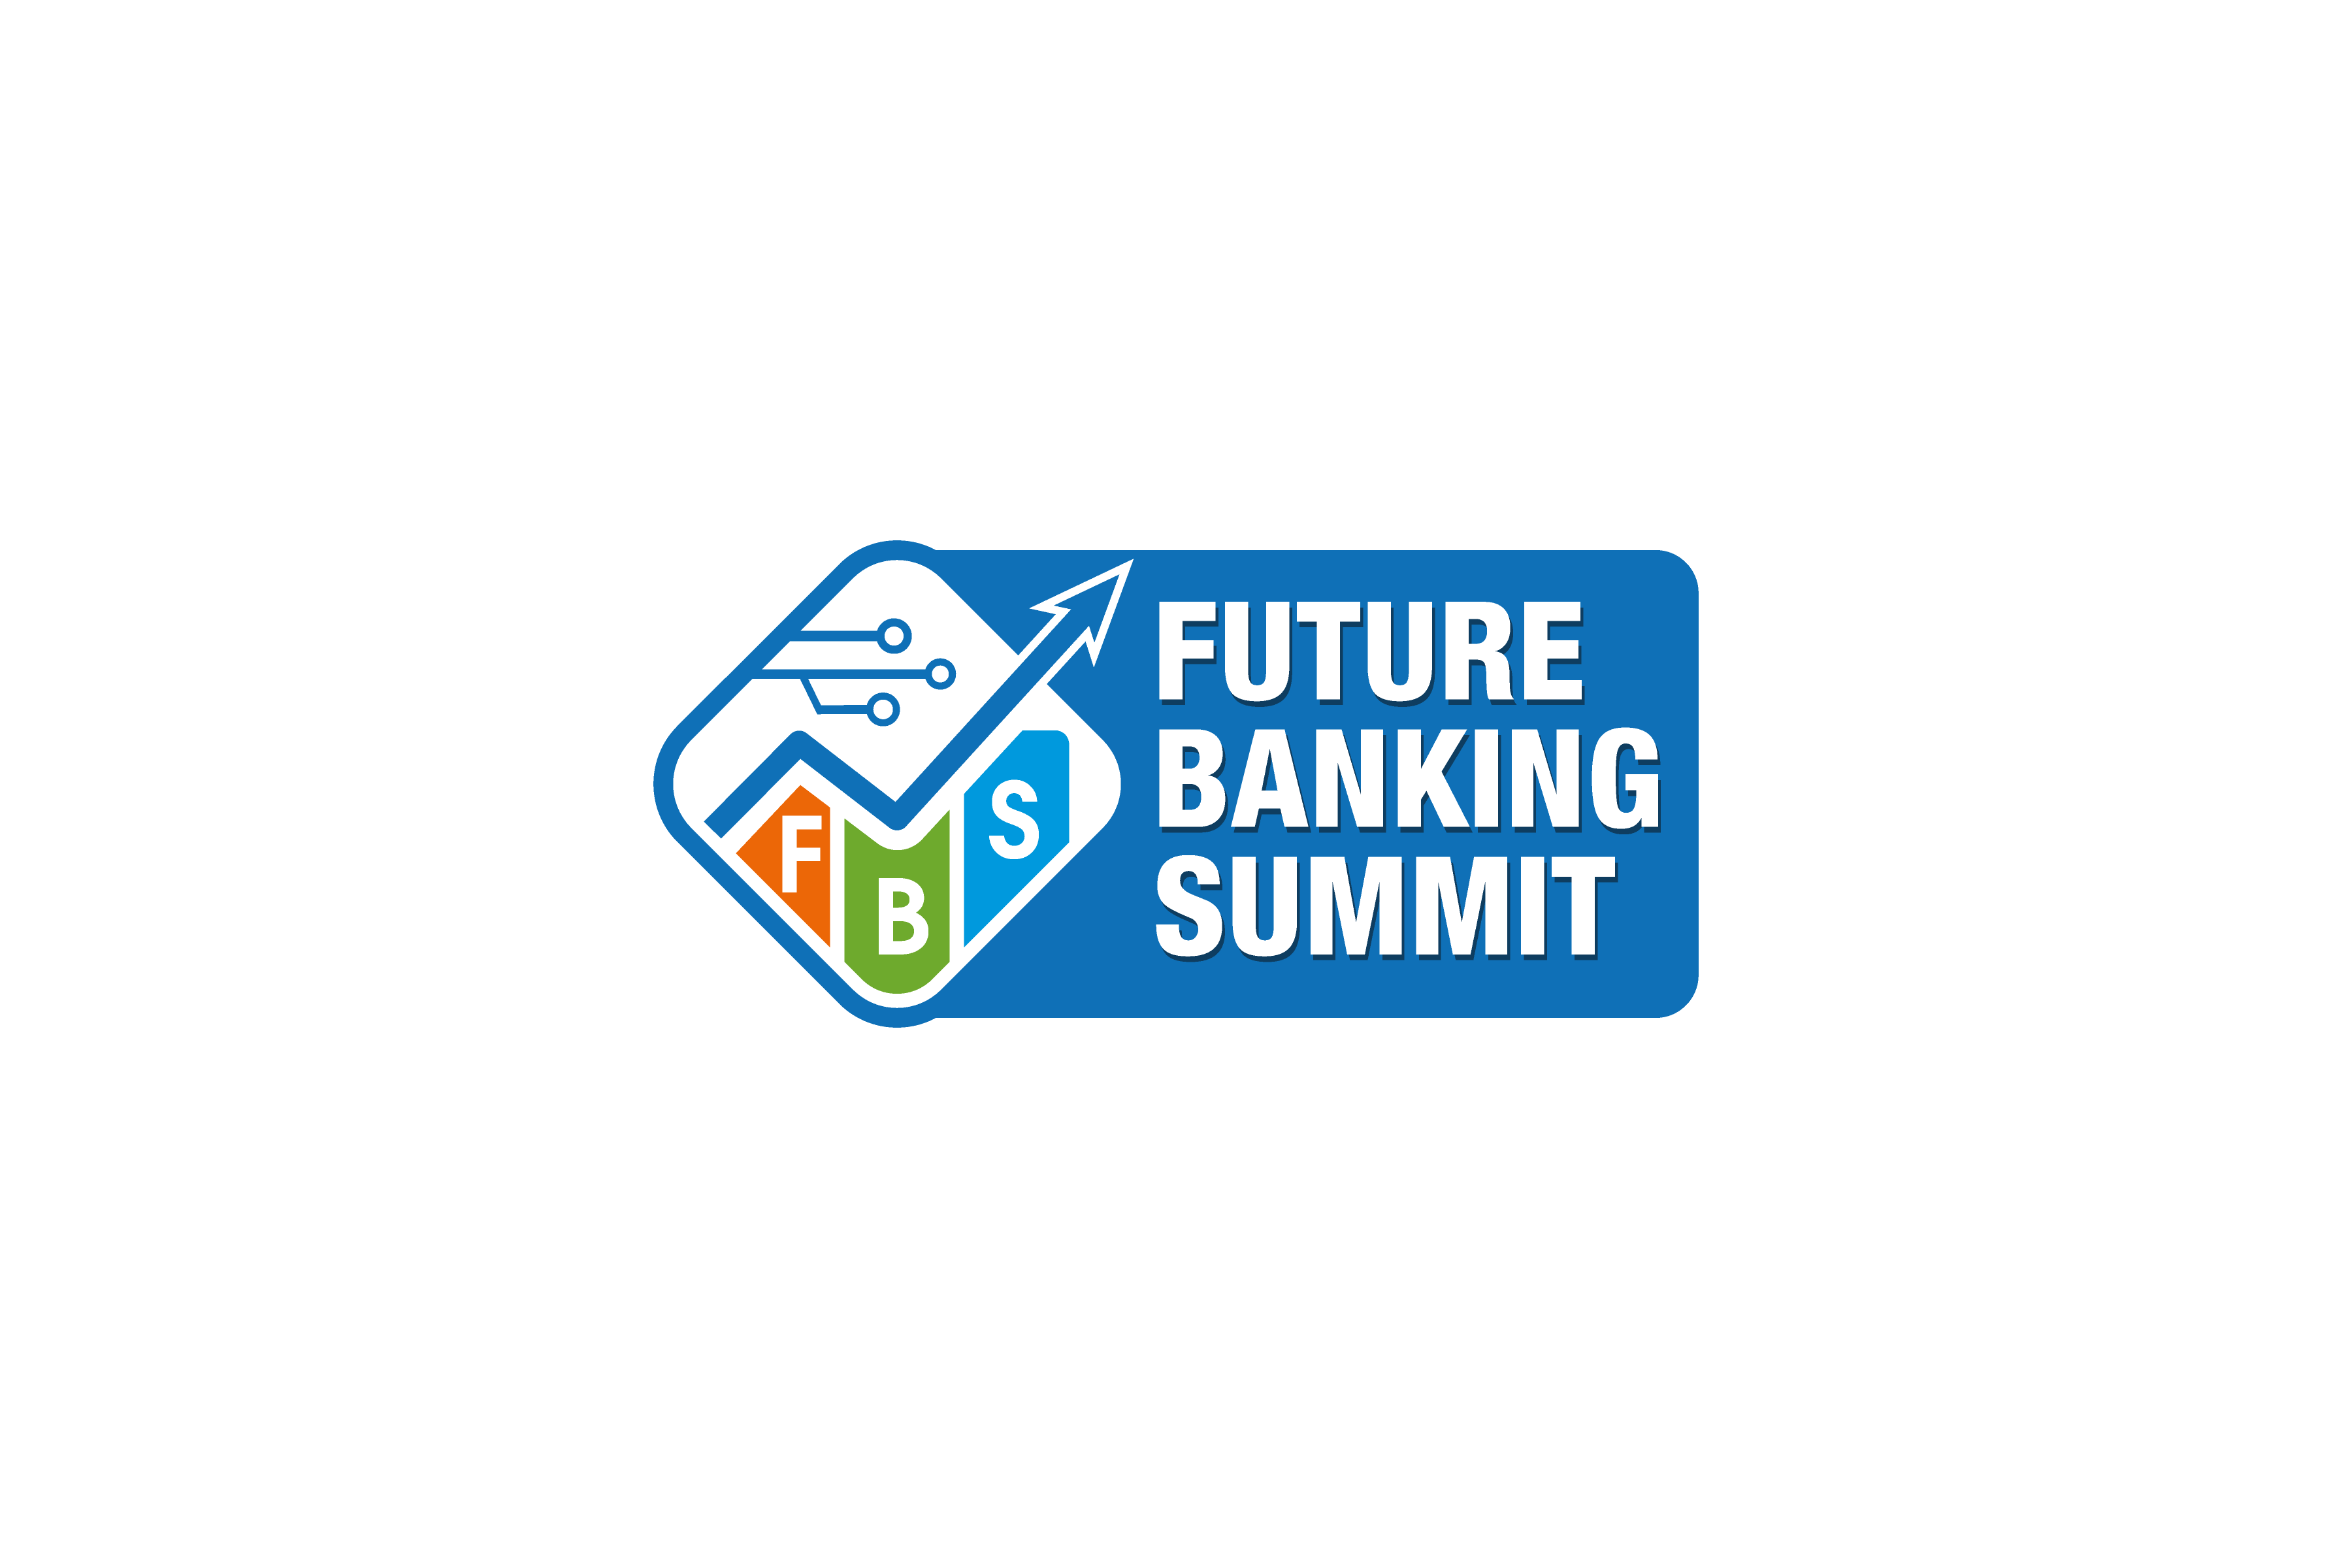 FUTURE BANKING SUMMIT 2018 